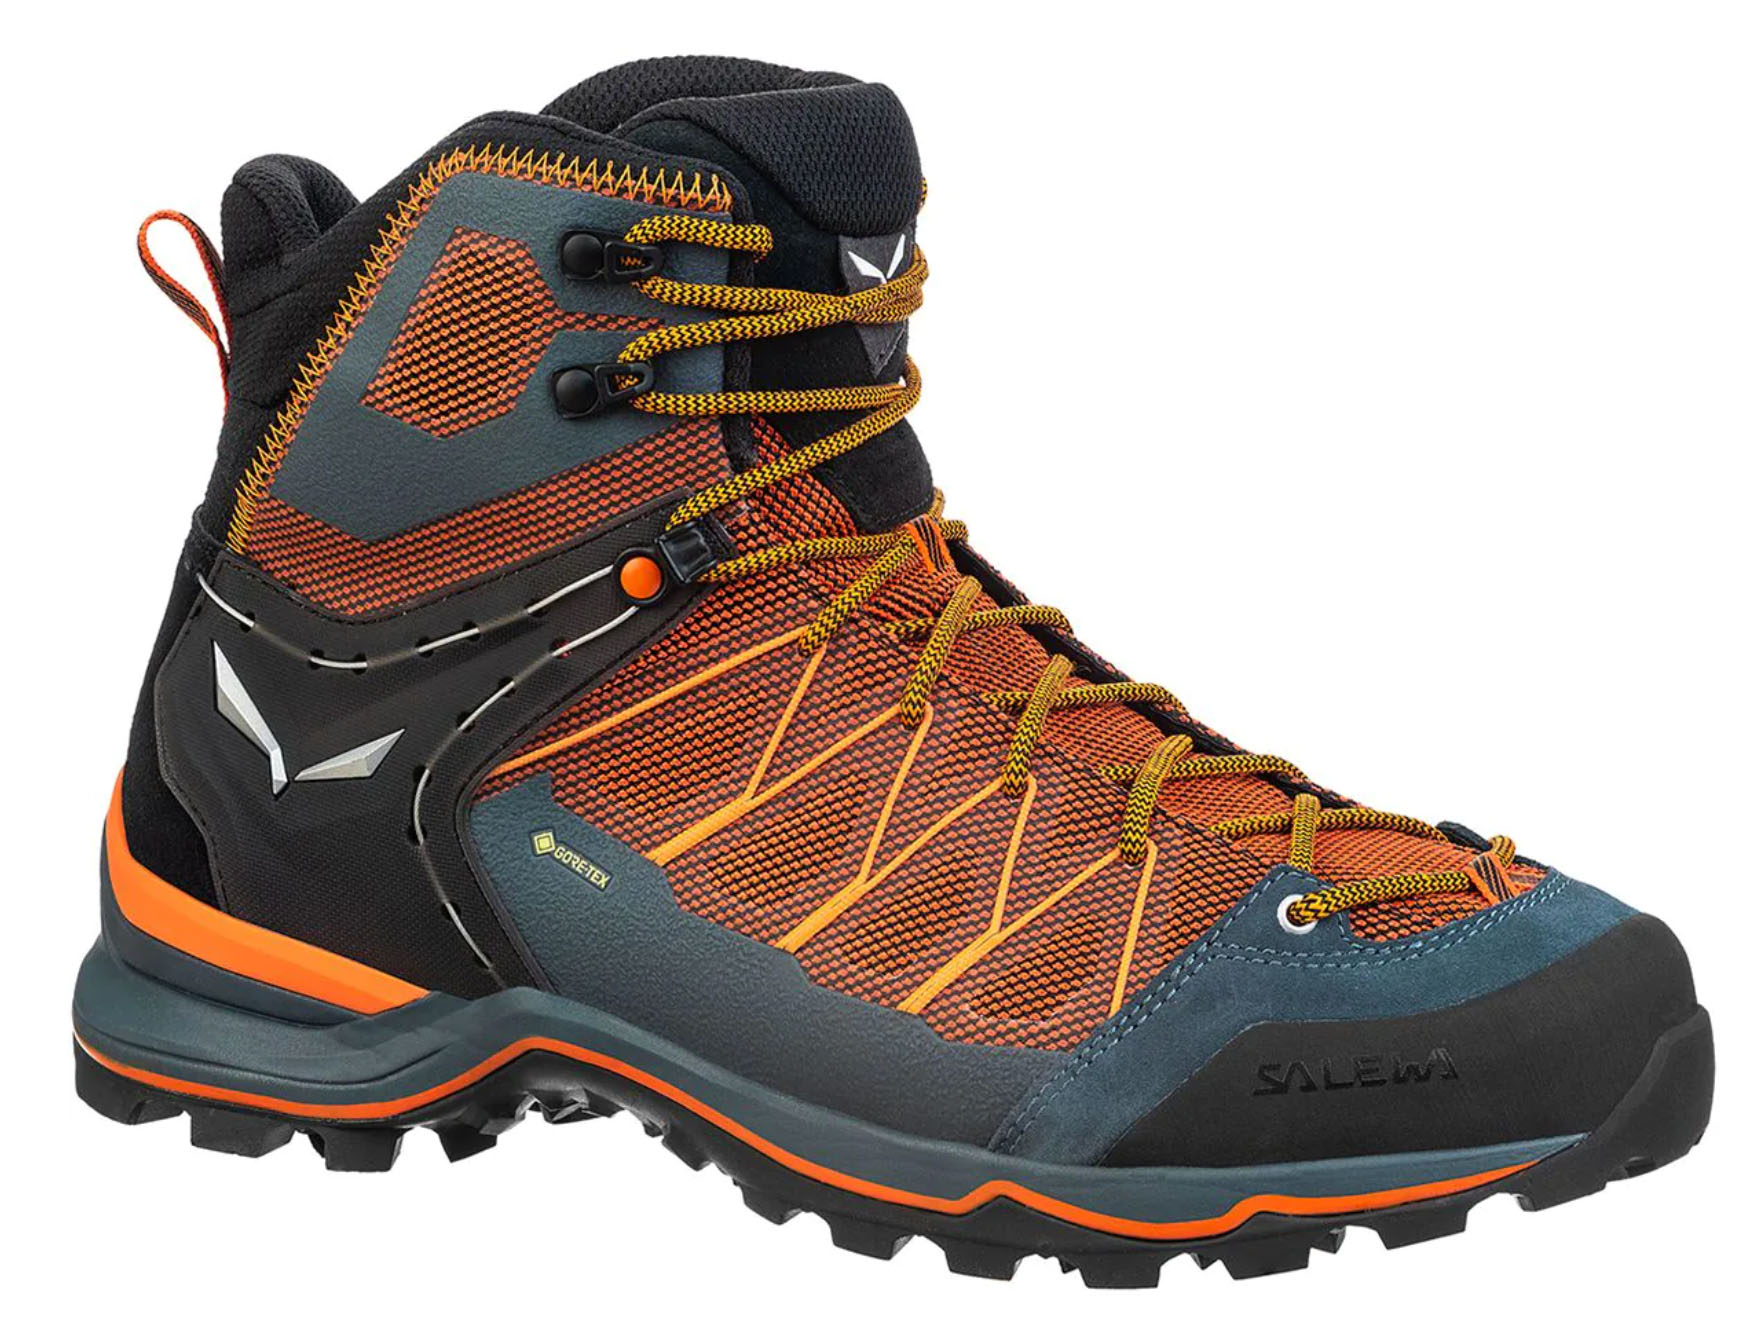 Hiking boot (Salewa Mountain Trainer Lite Mid GTX)